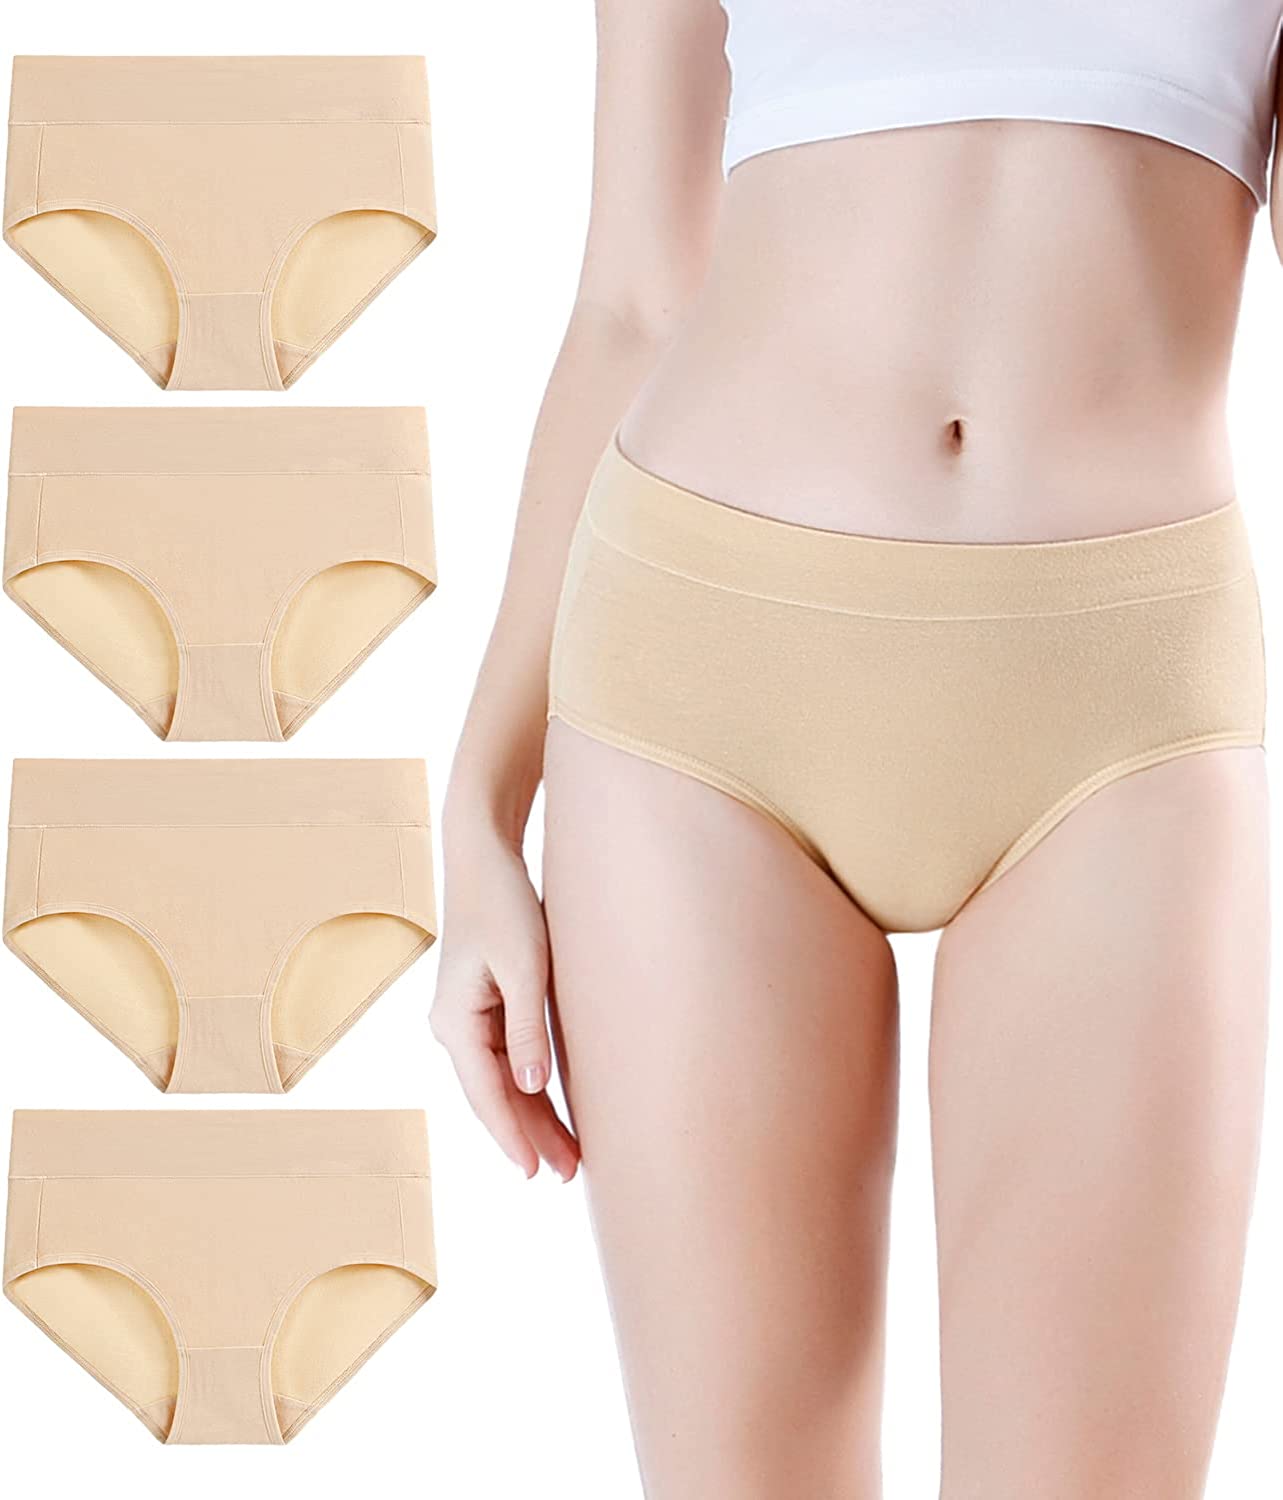  Wirarpa Womens Cotton Underwear High Waist Briefs Ladies  Soft Panties Full Coverage Underpants 5 Pack X-Large